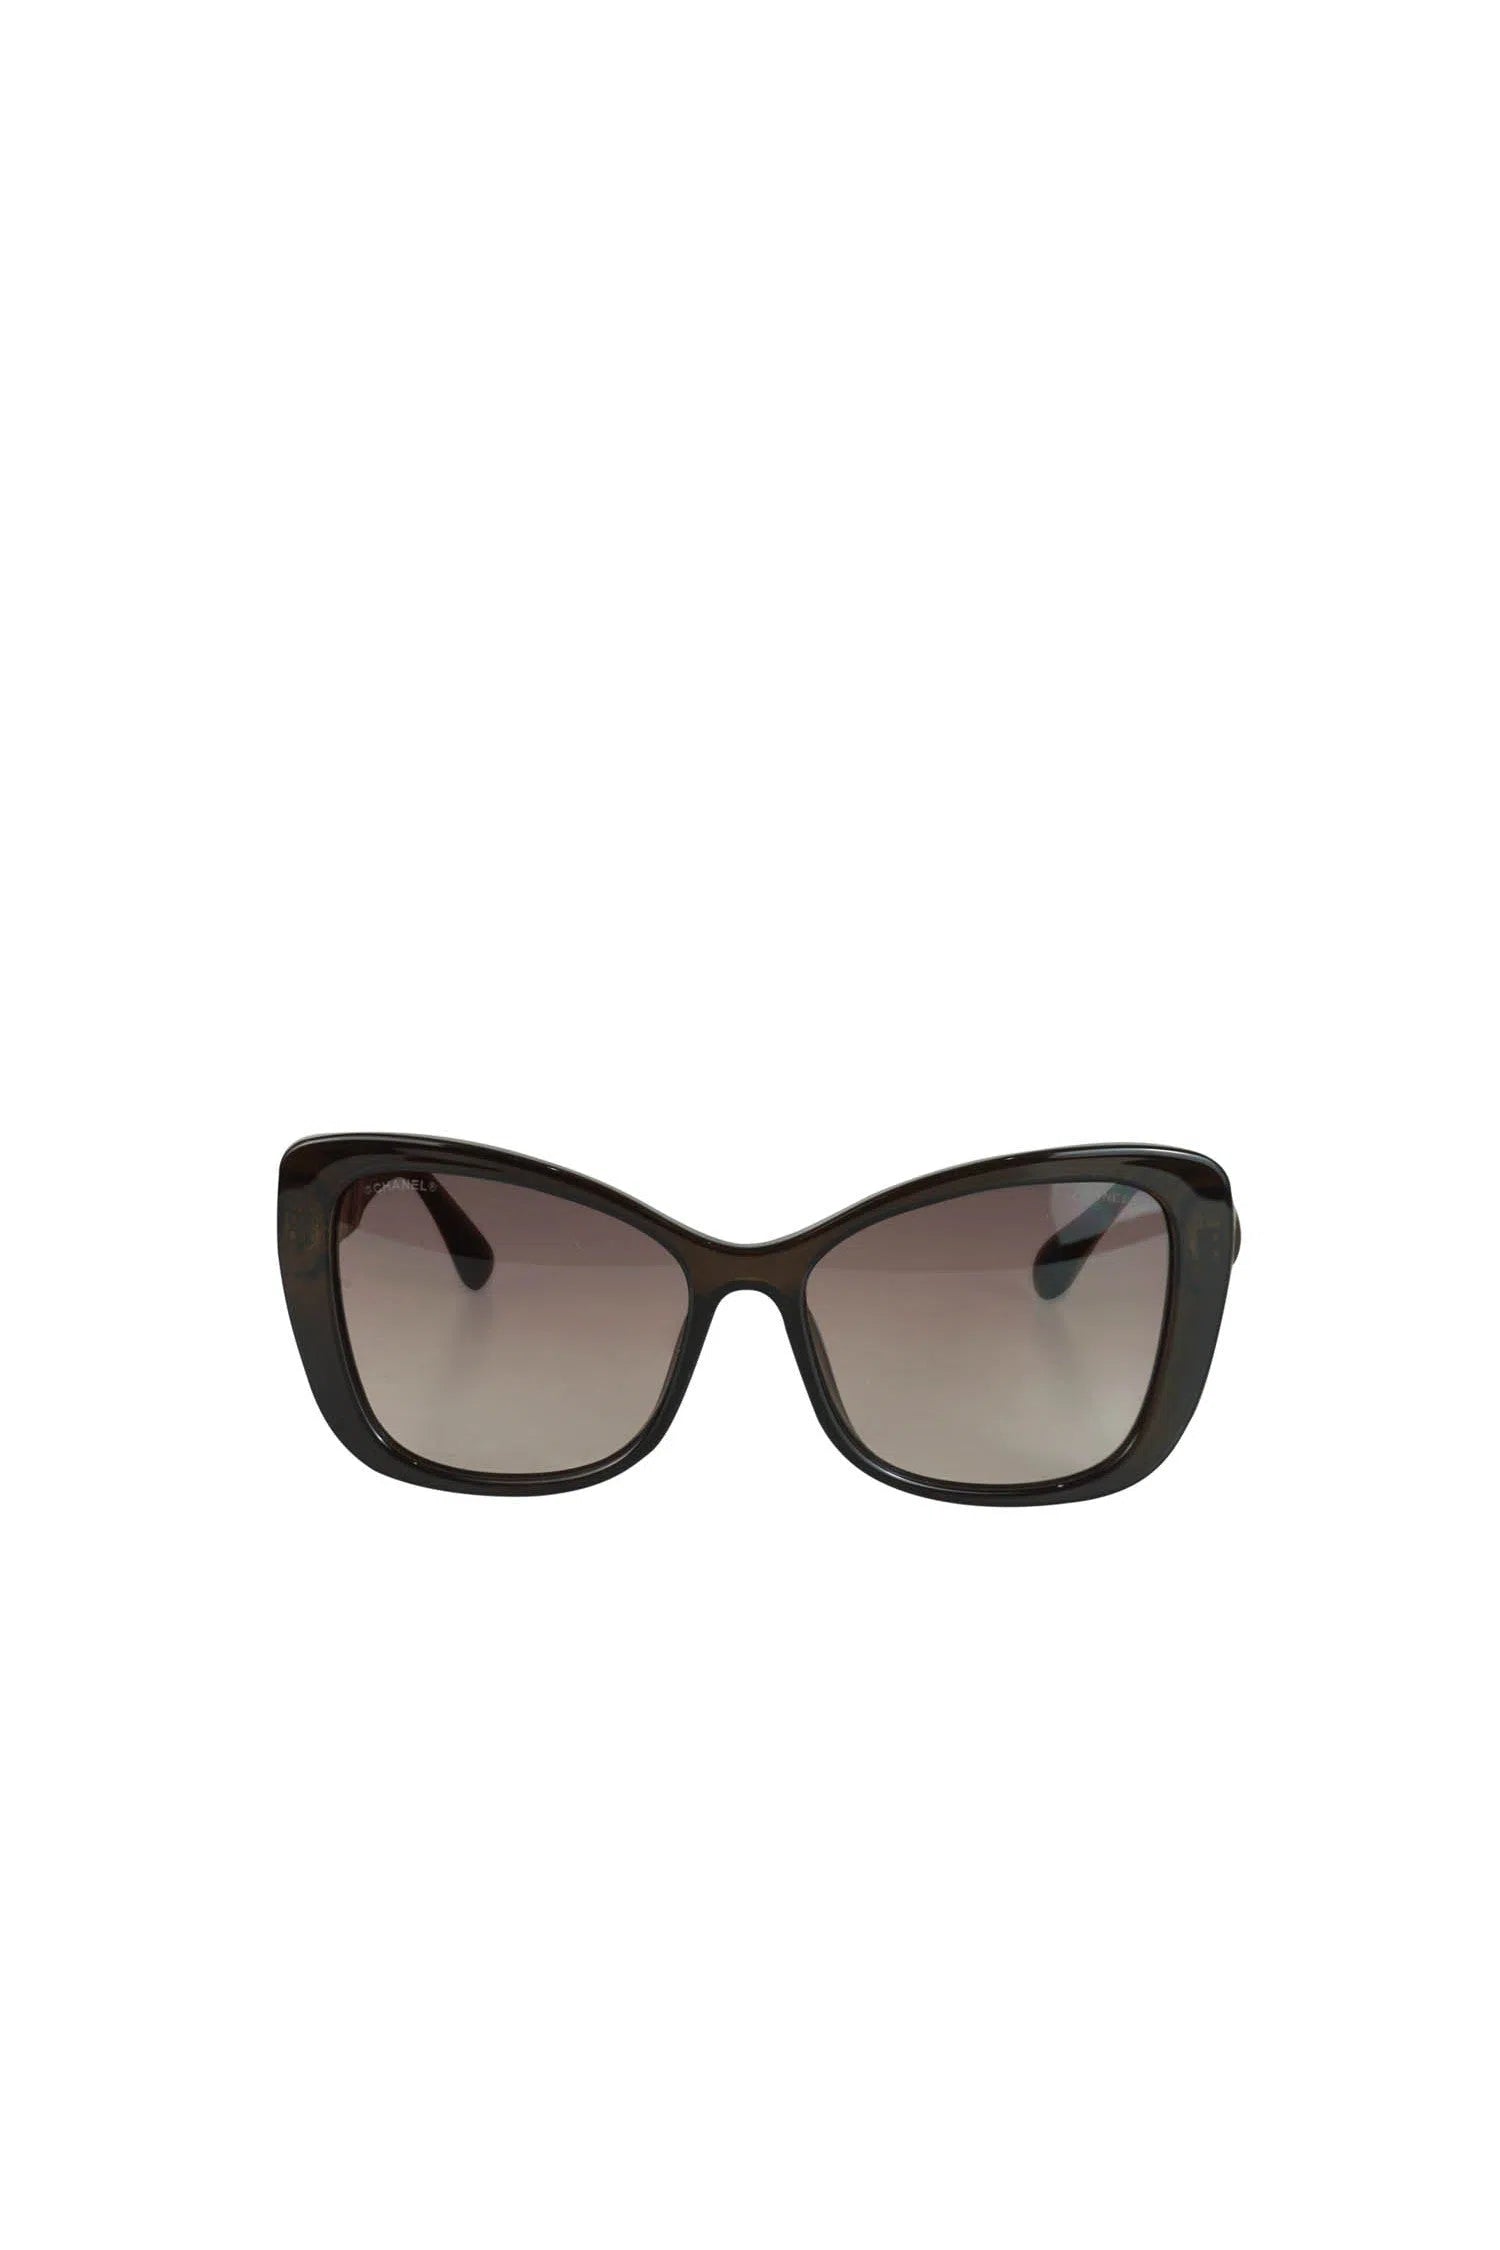 Chanel Oversize Black Sunglasses Pearl Temple - Foxy Couture Carmel